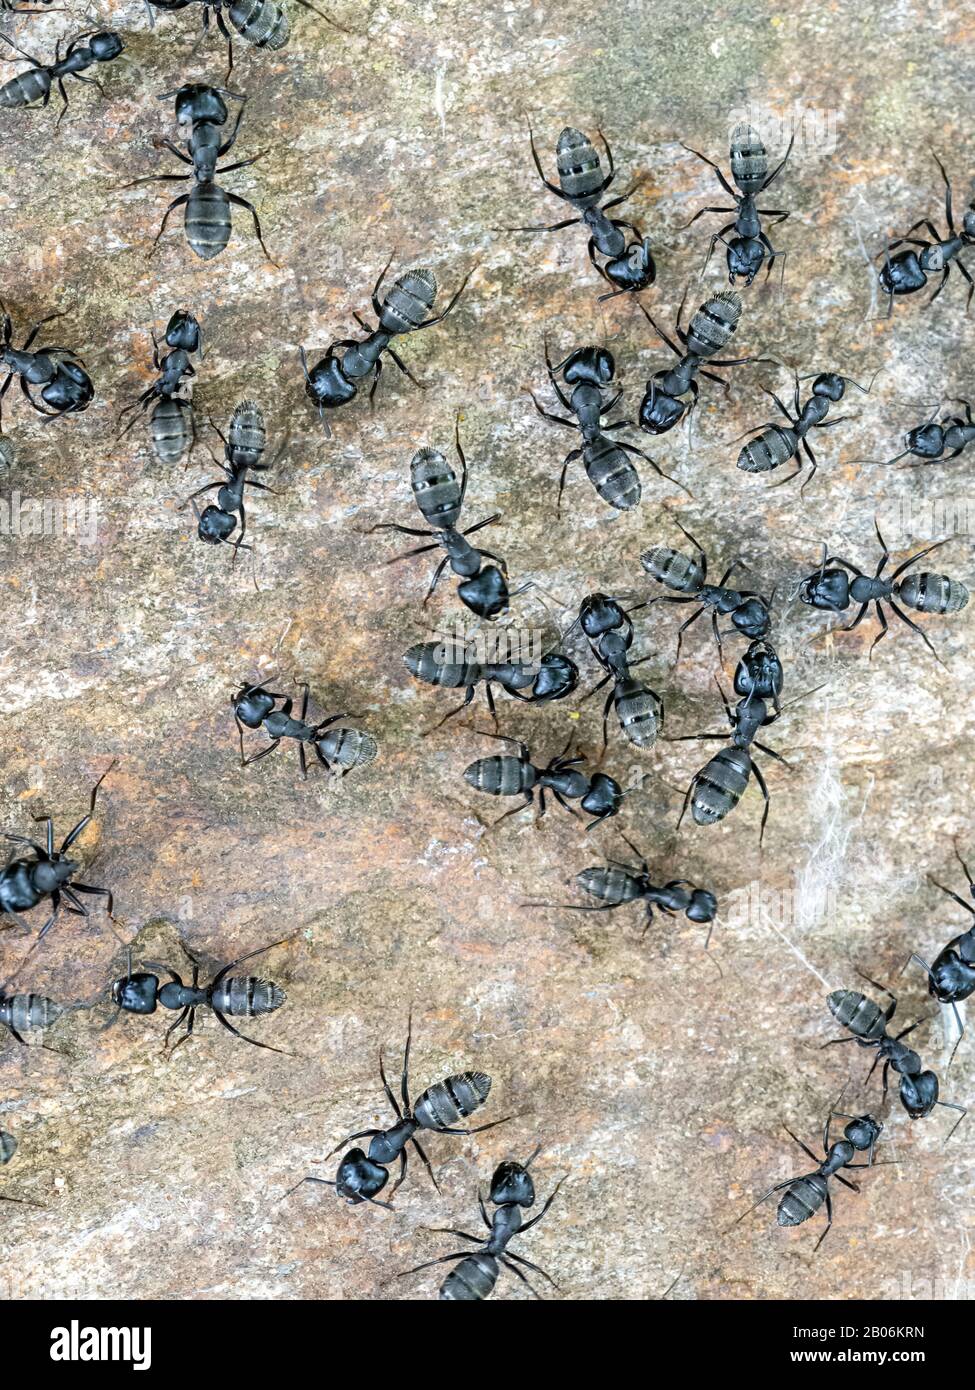 Ameisen (Formicida), Serres, Griechenland Stockfoto